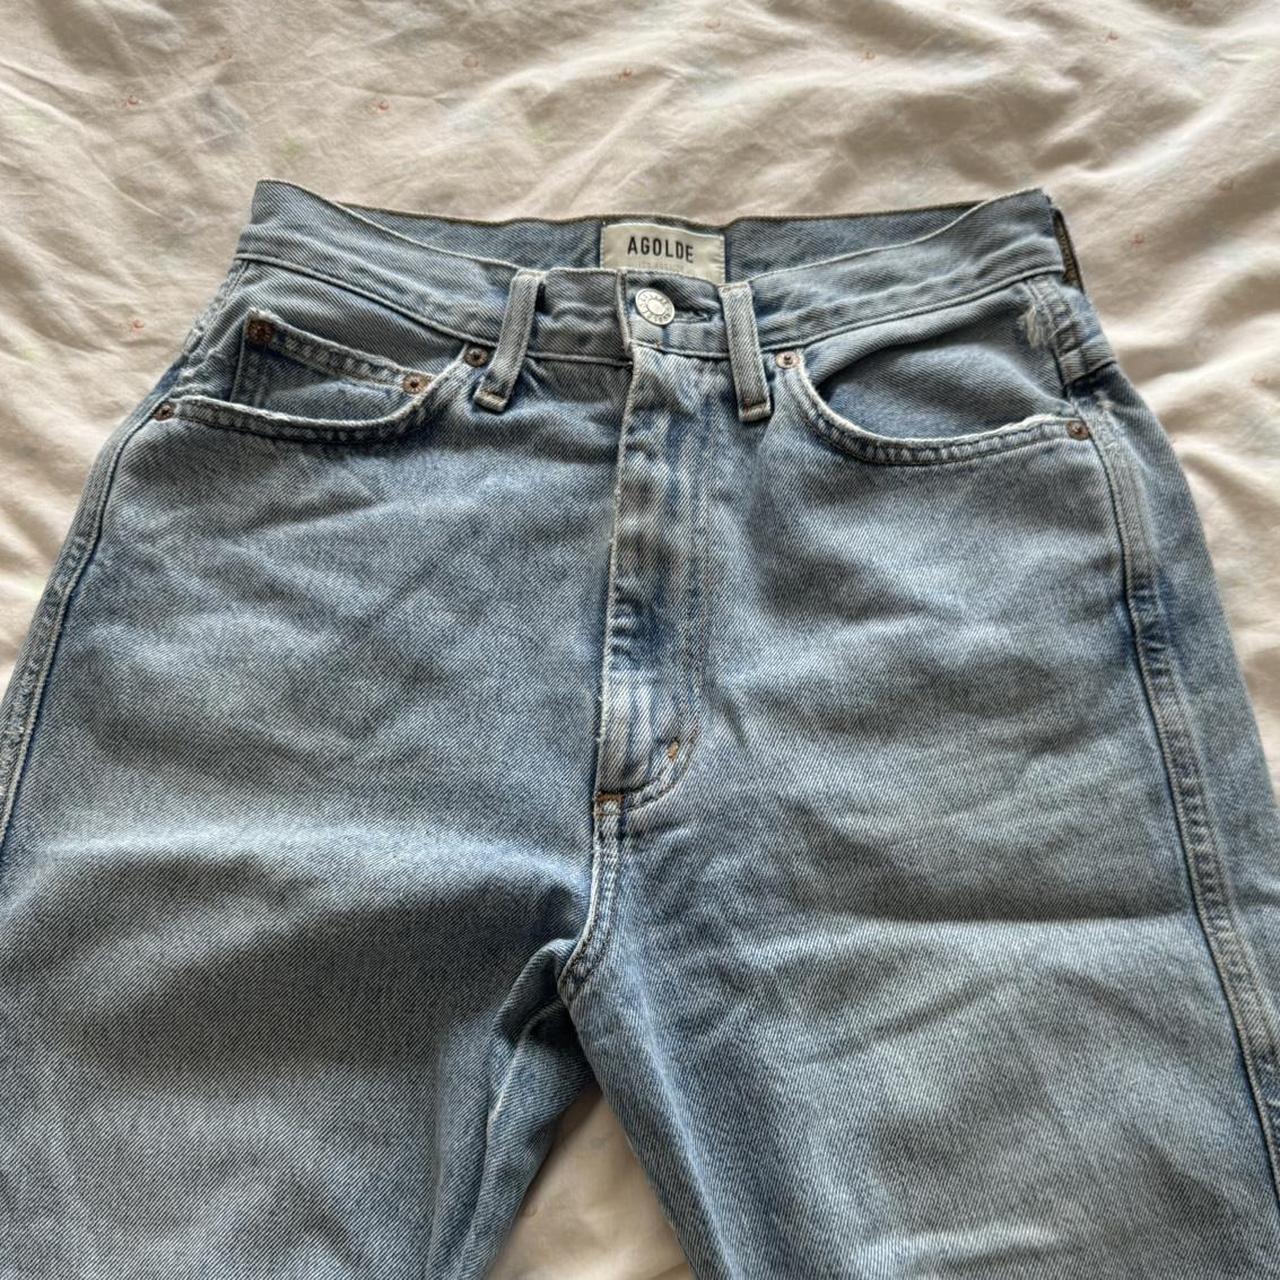 Agolde jeans Pinch waist style - Depop